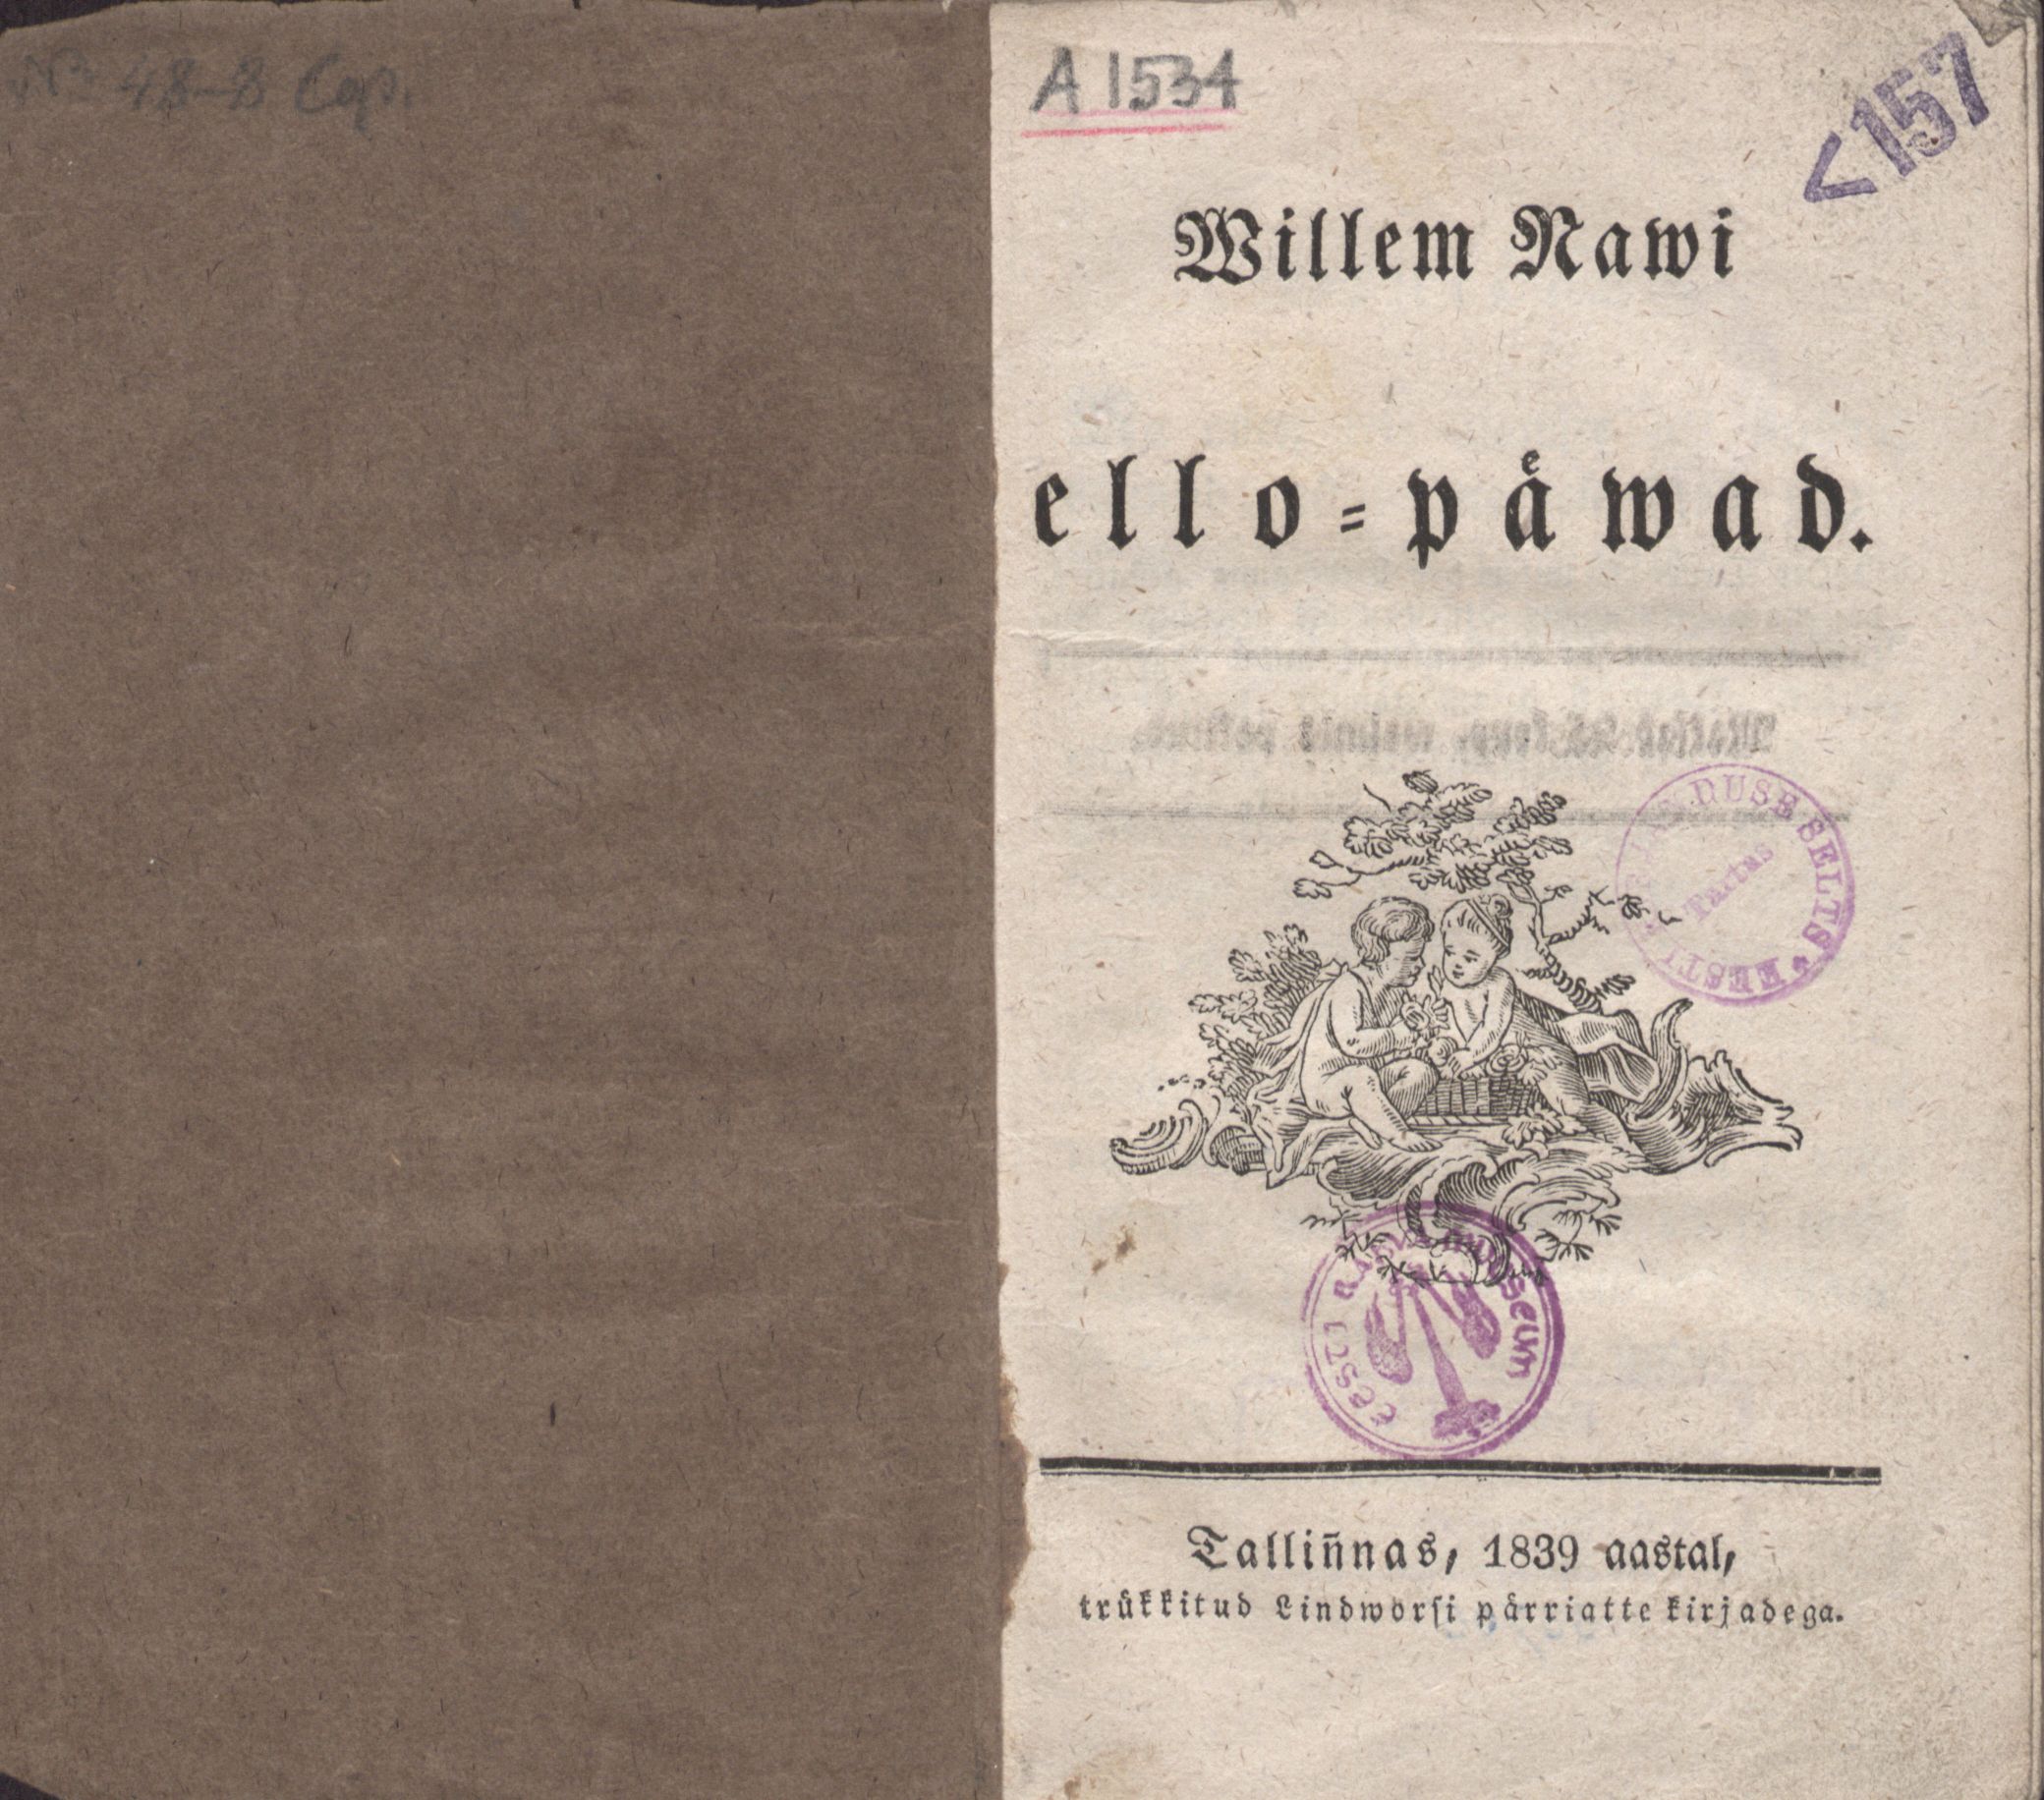 Willem Nawi ello-päwad (1839) | 1. Titelblatt